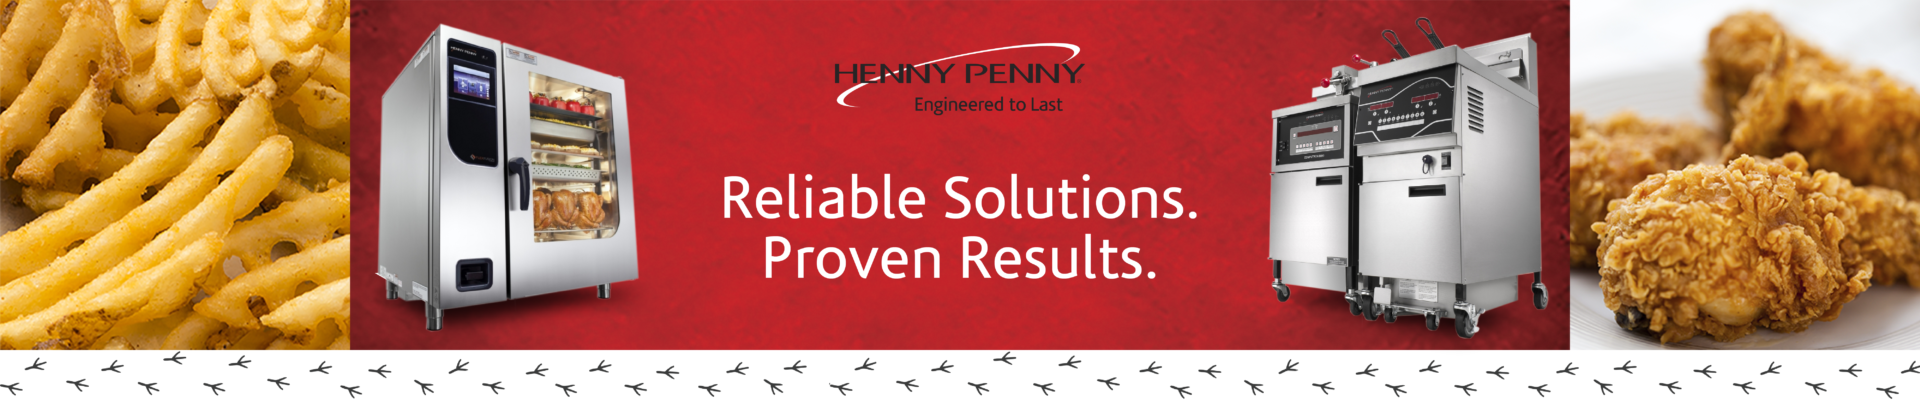 henny-penny-page-header-image-e1515526457684